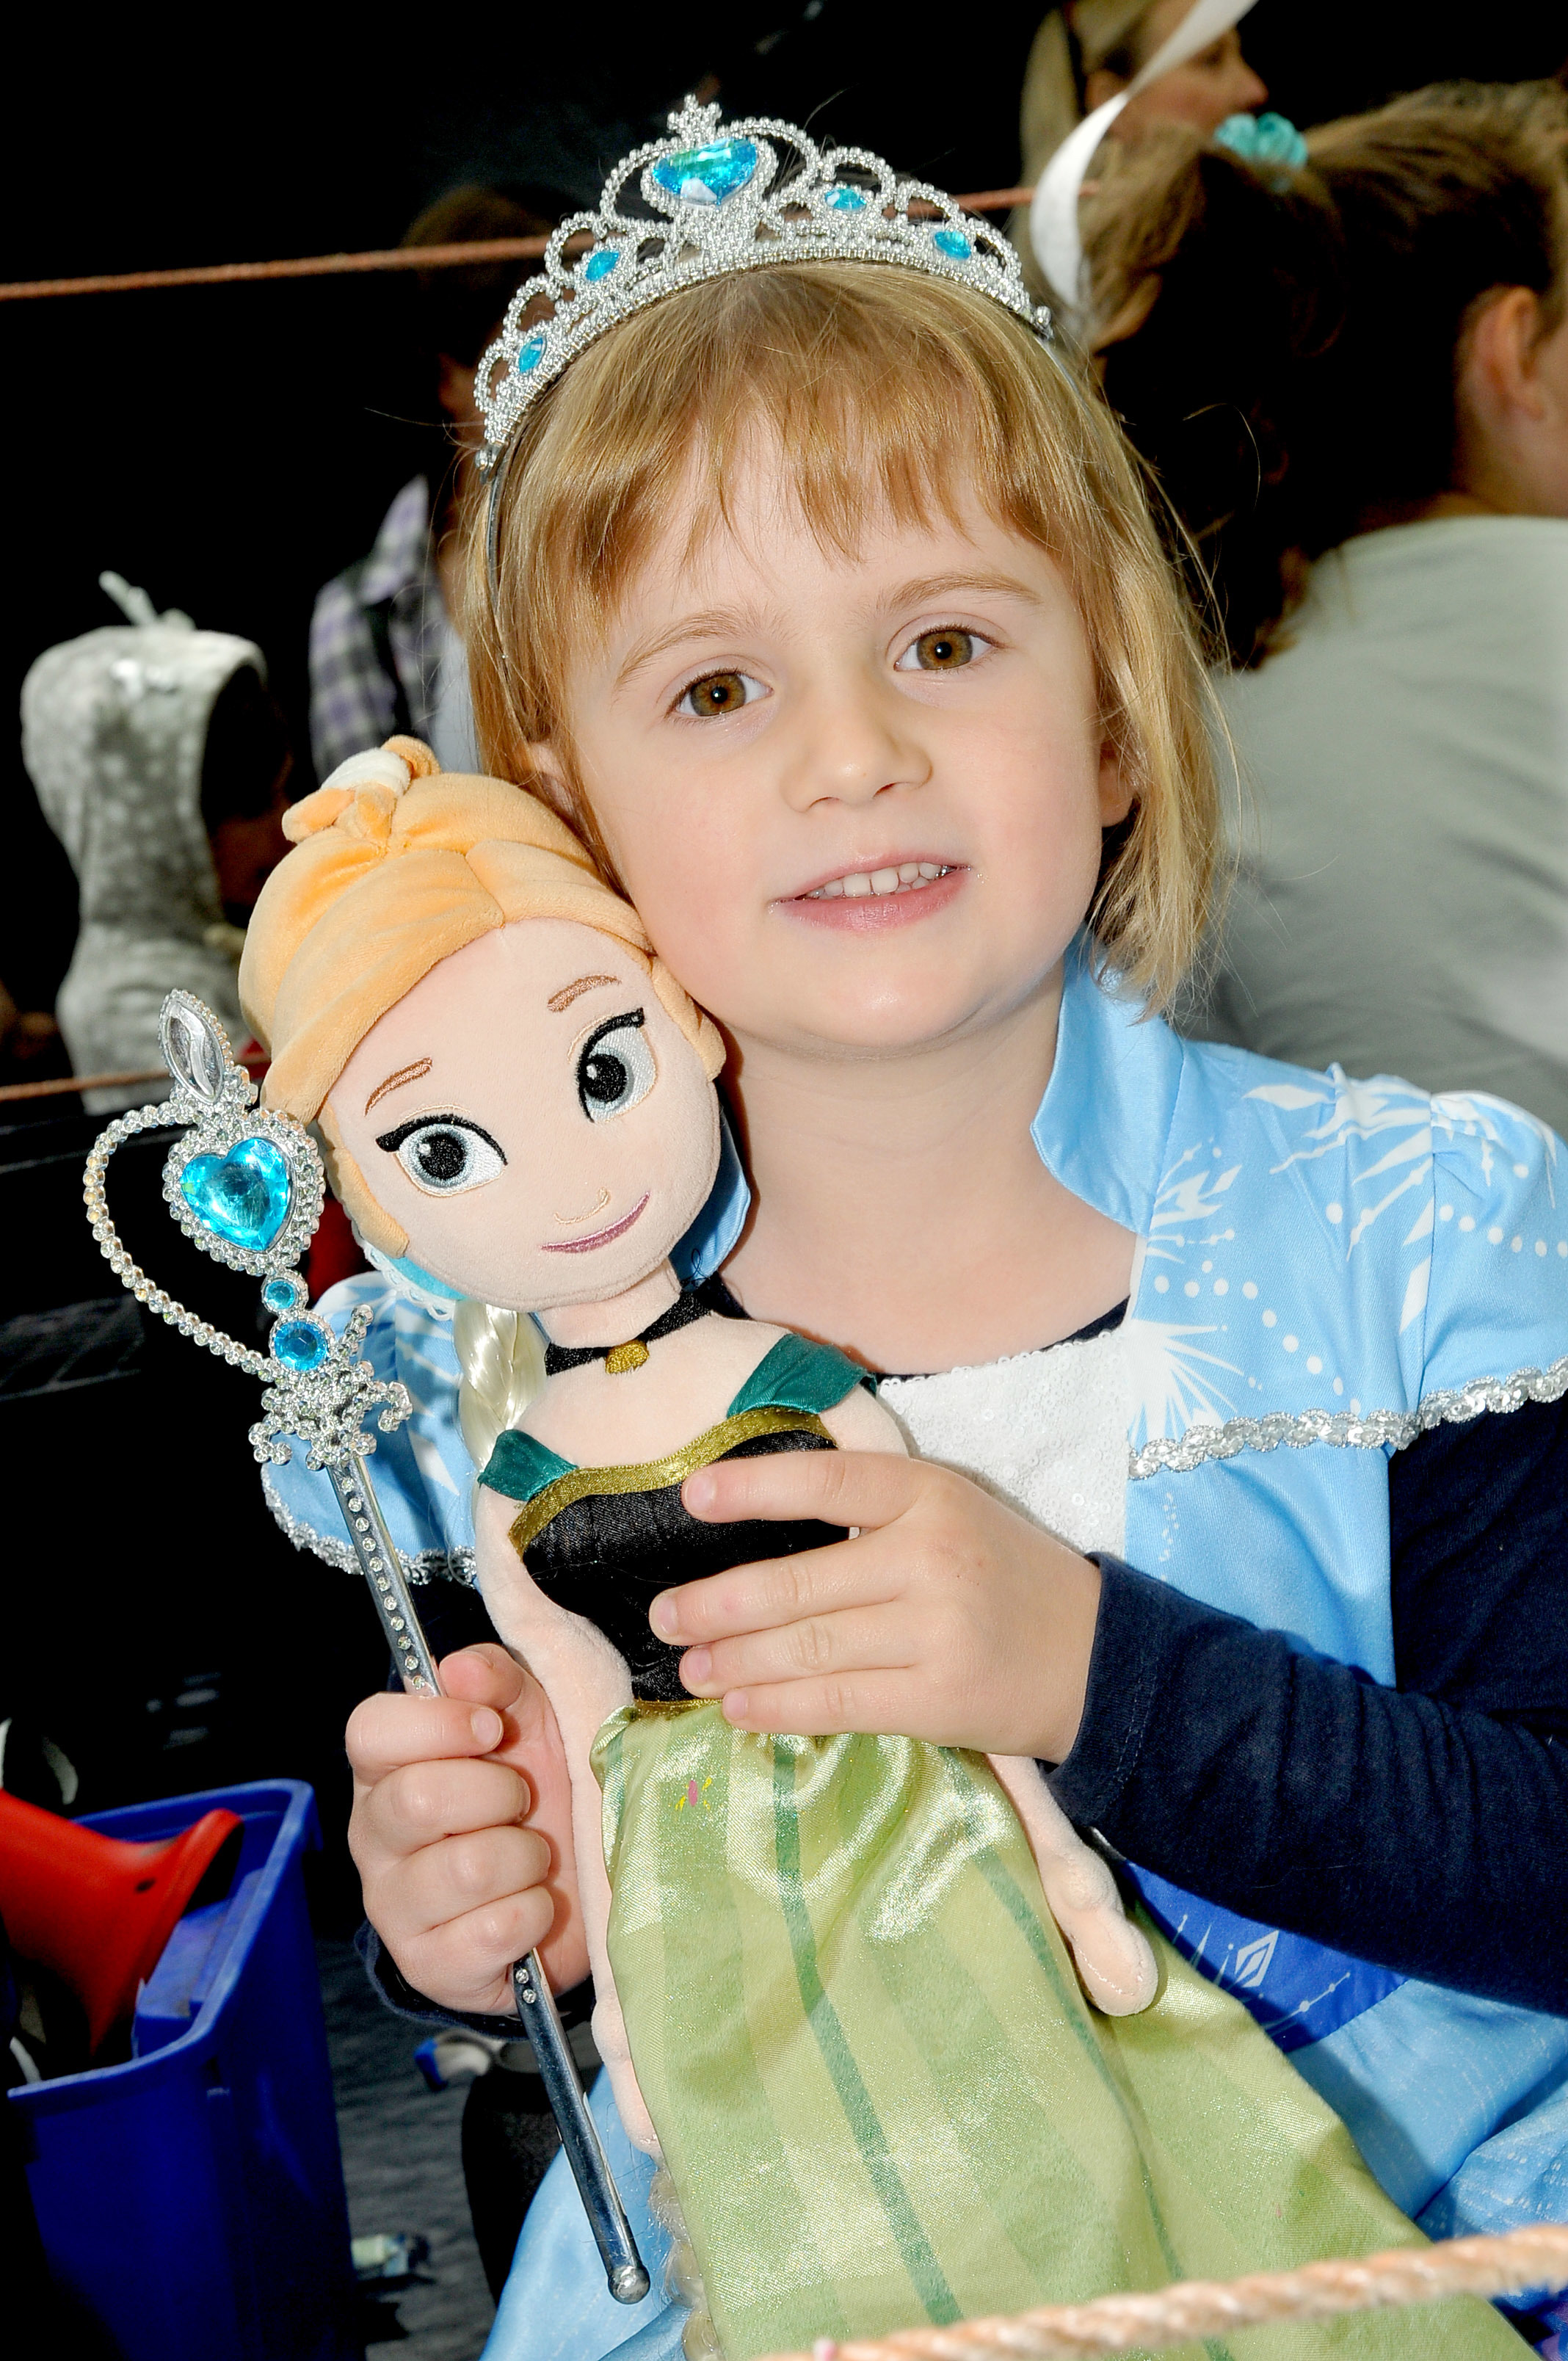 Anna Rees as Elsa from Frozen